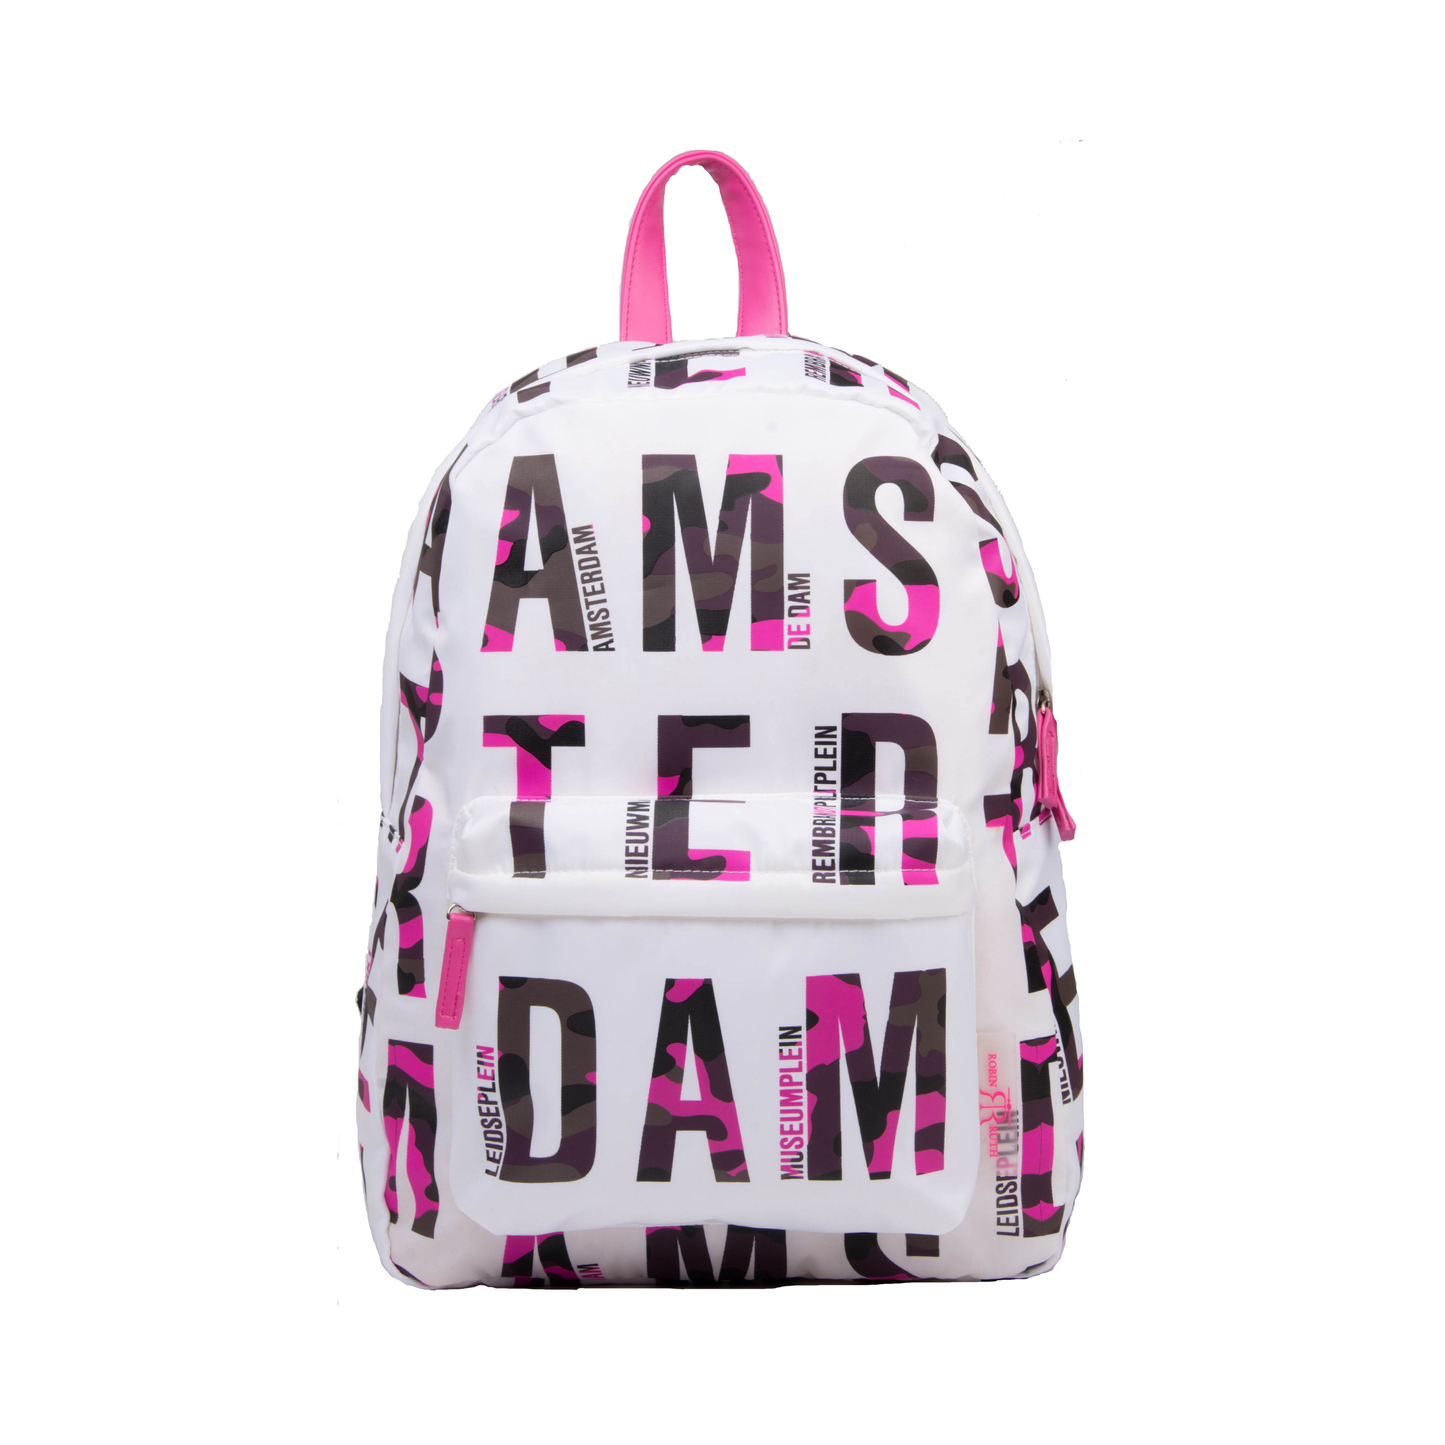 Daniel - Backpack - Amsterdam